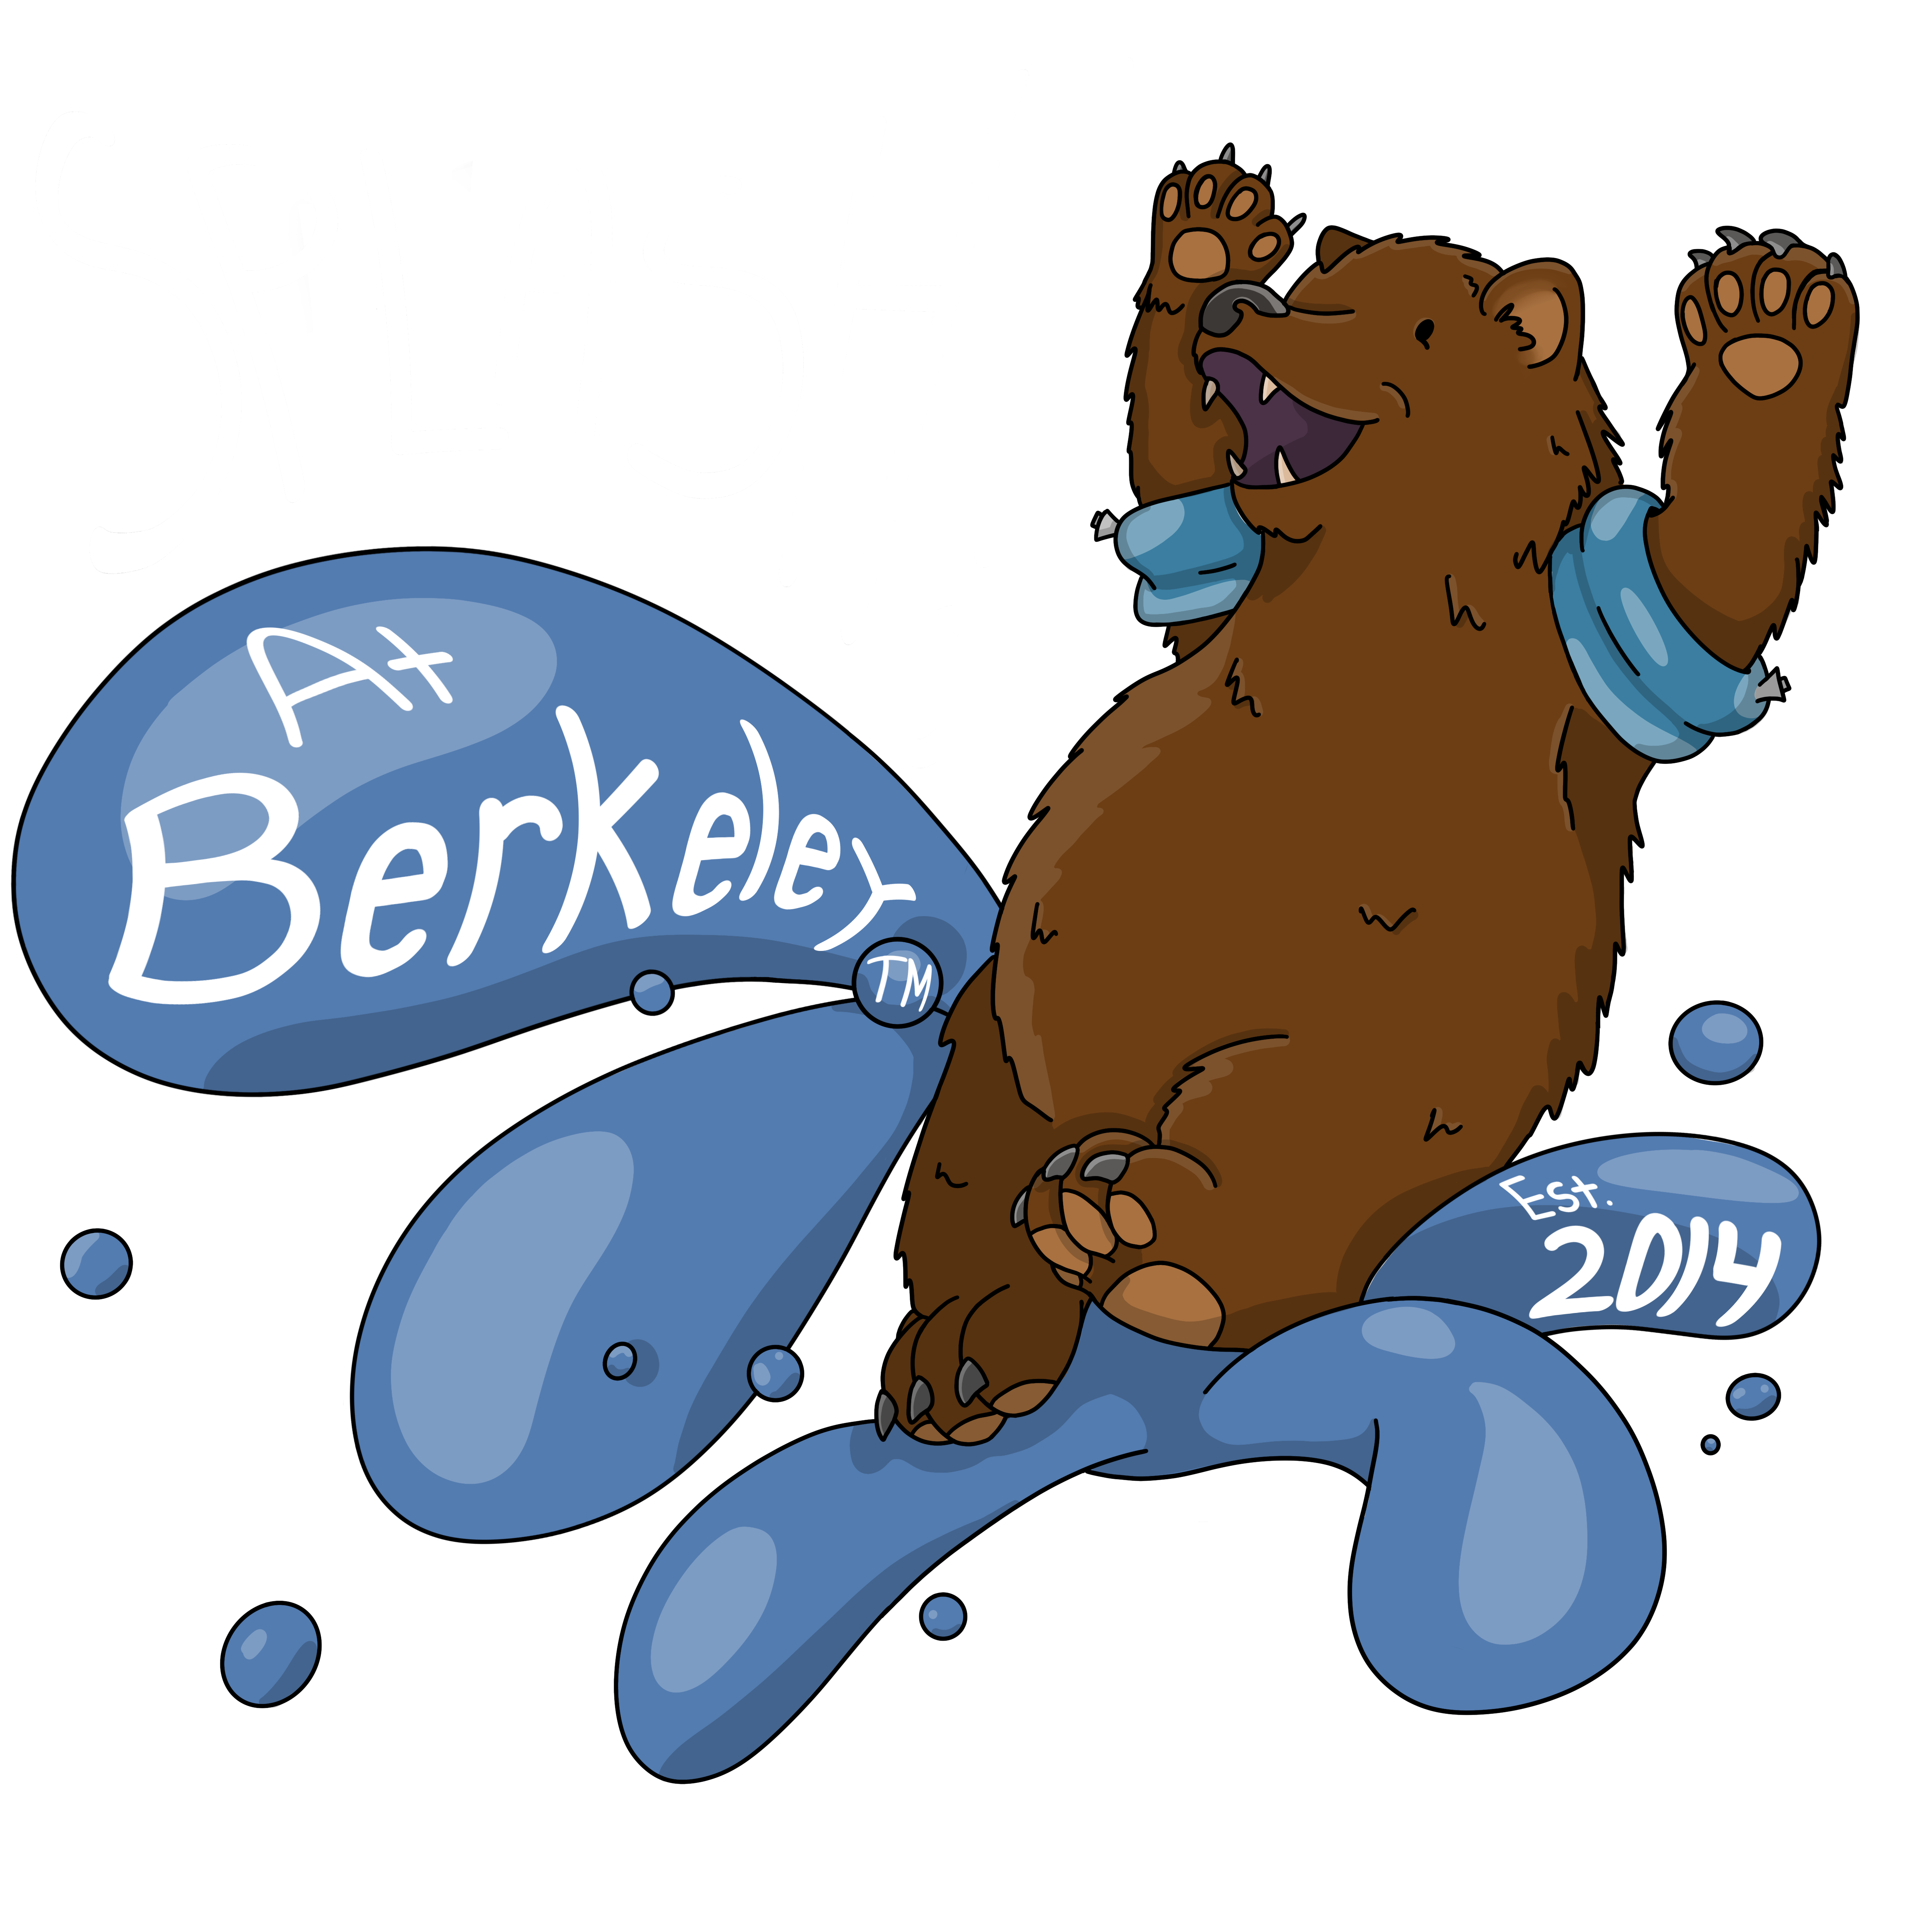 Splash at Berkeley